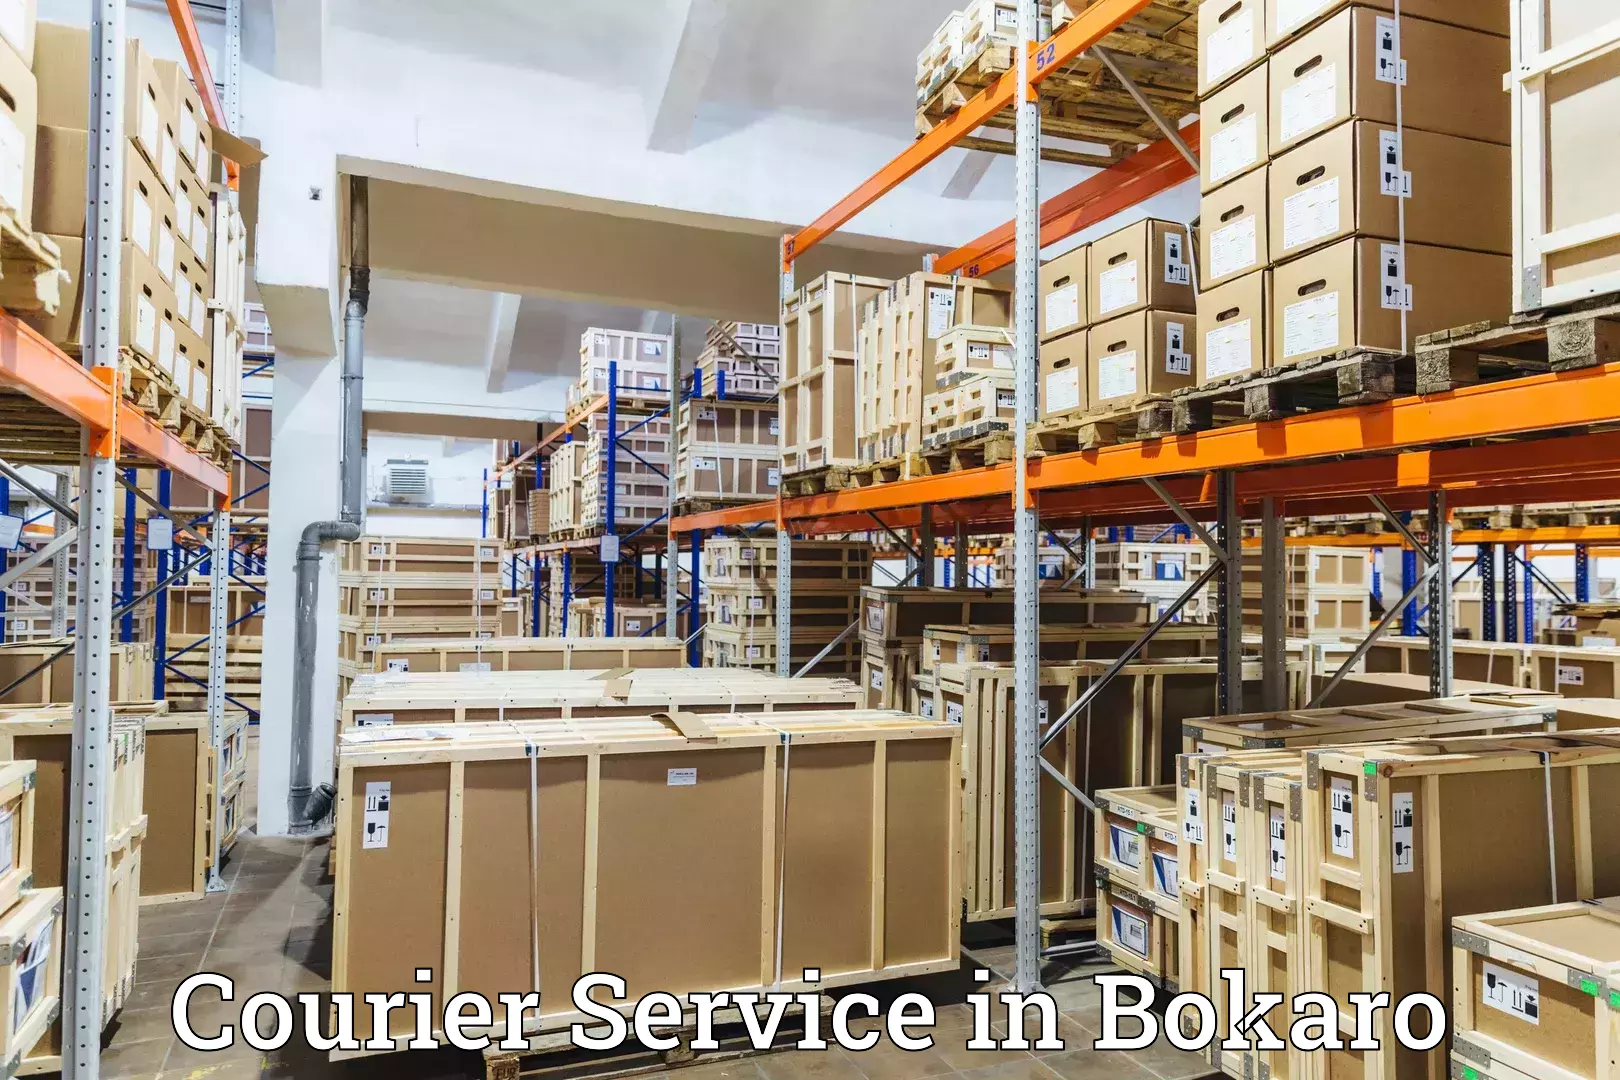 Customer-friendly courier services in Bokaro